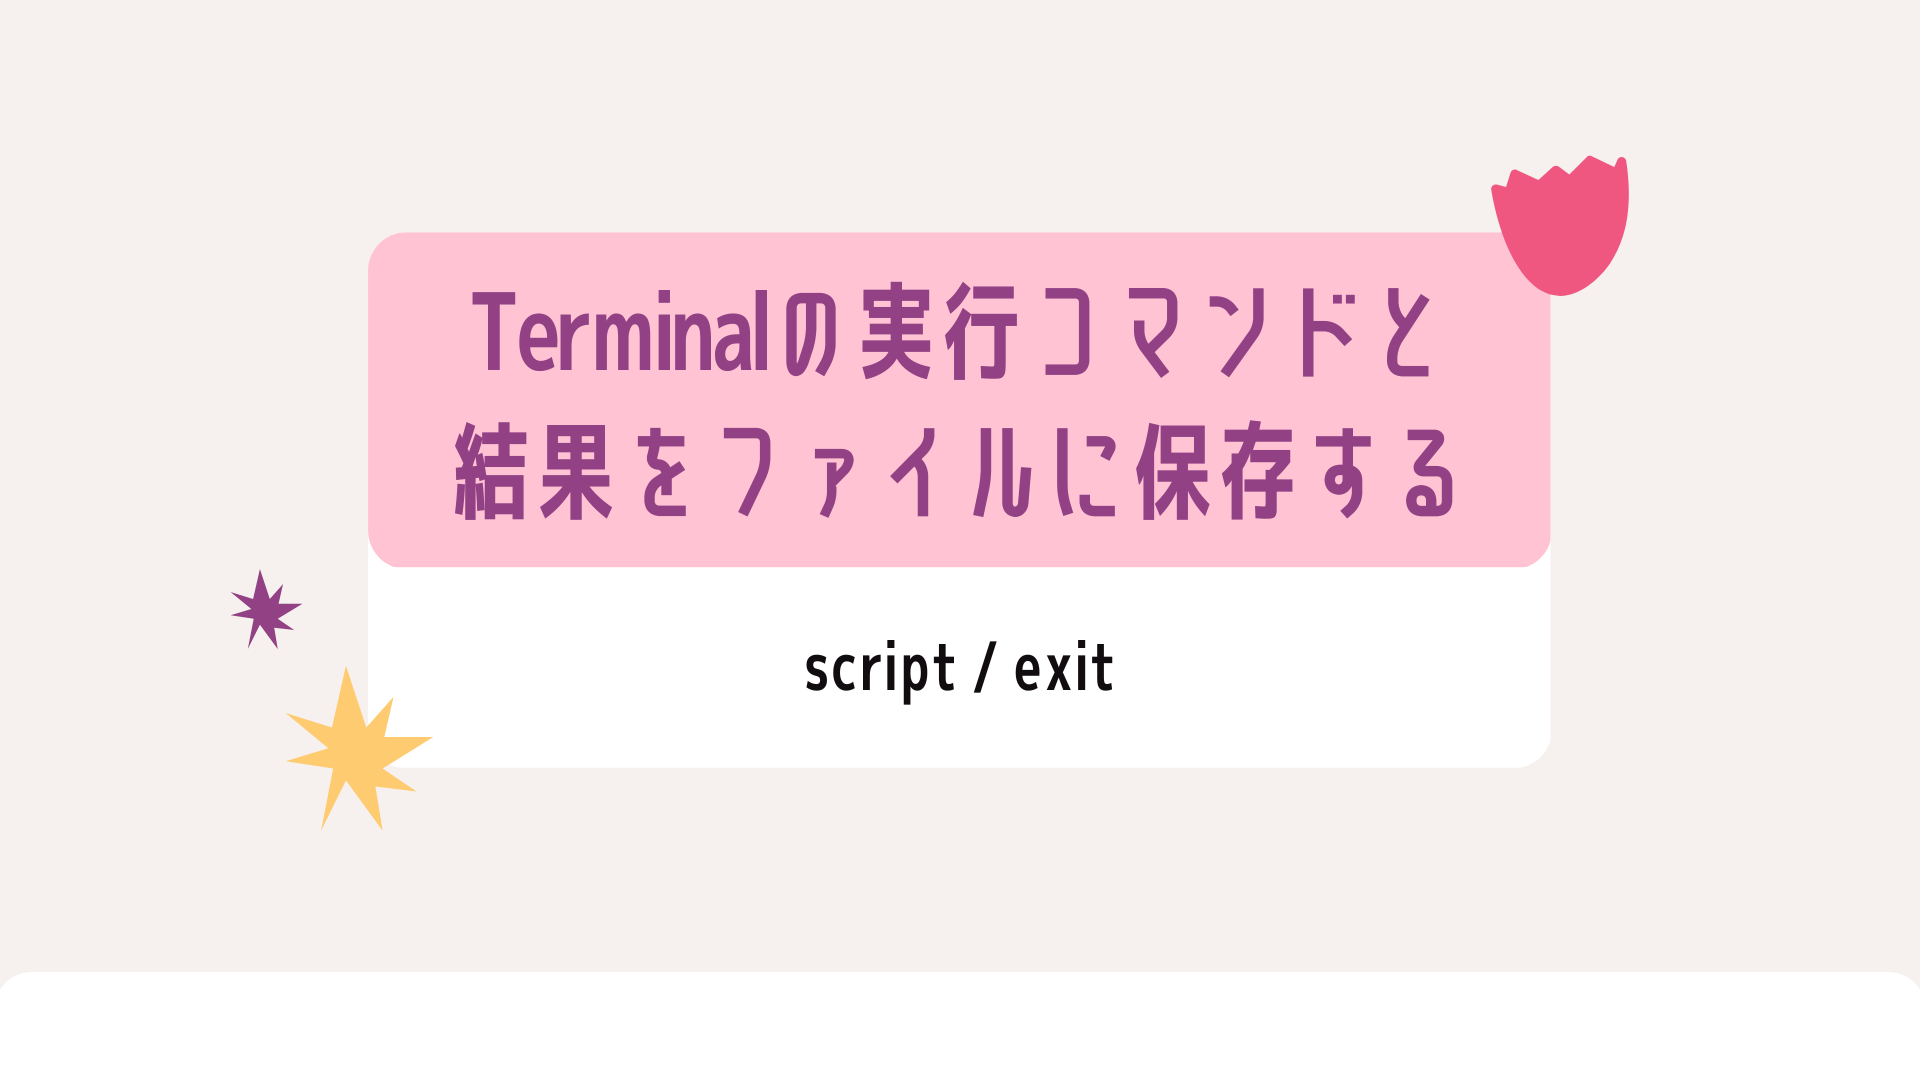 Terminalの実行コマンドと結果を全てファイルに保存する